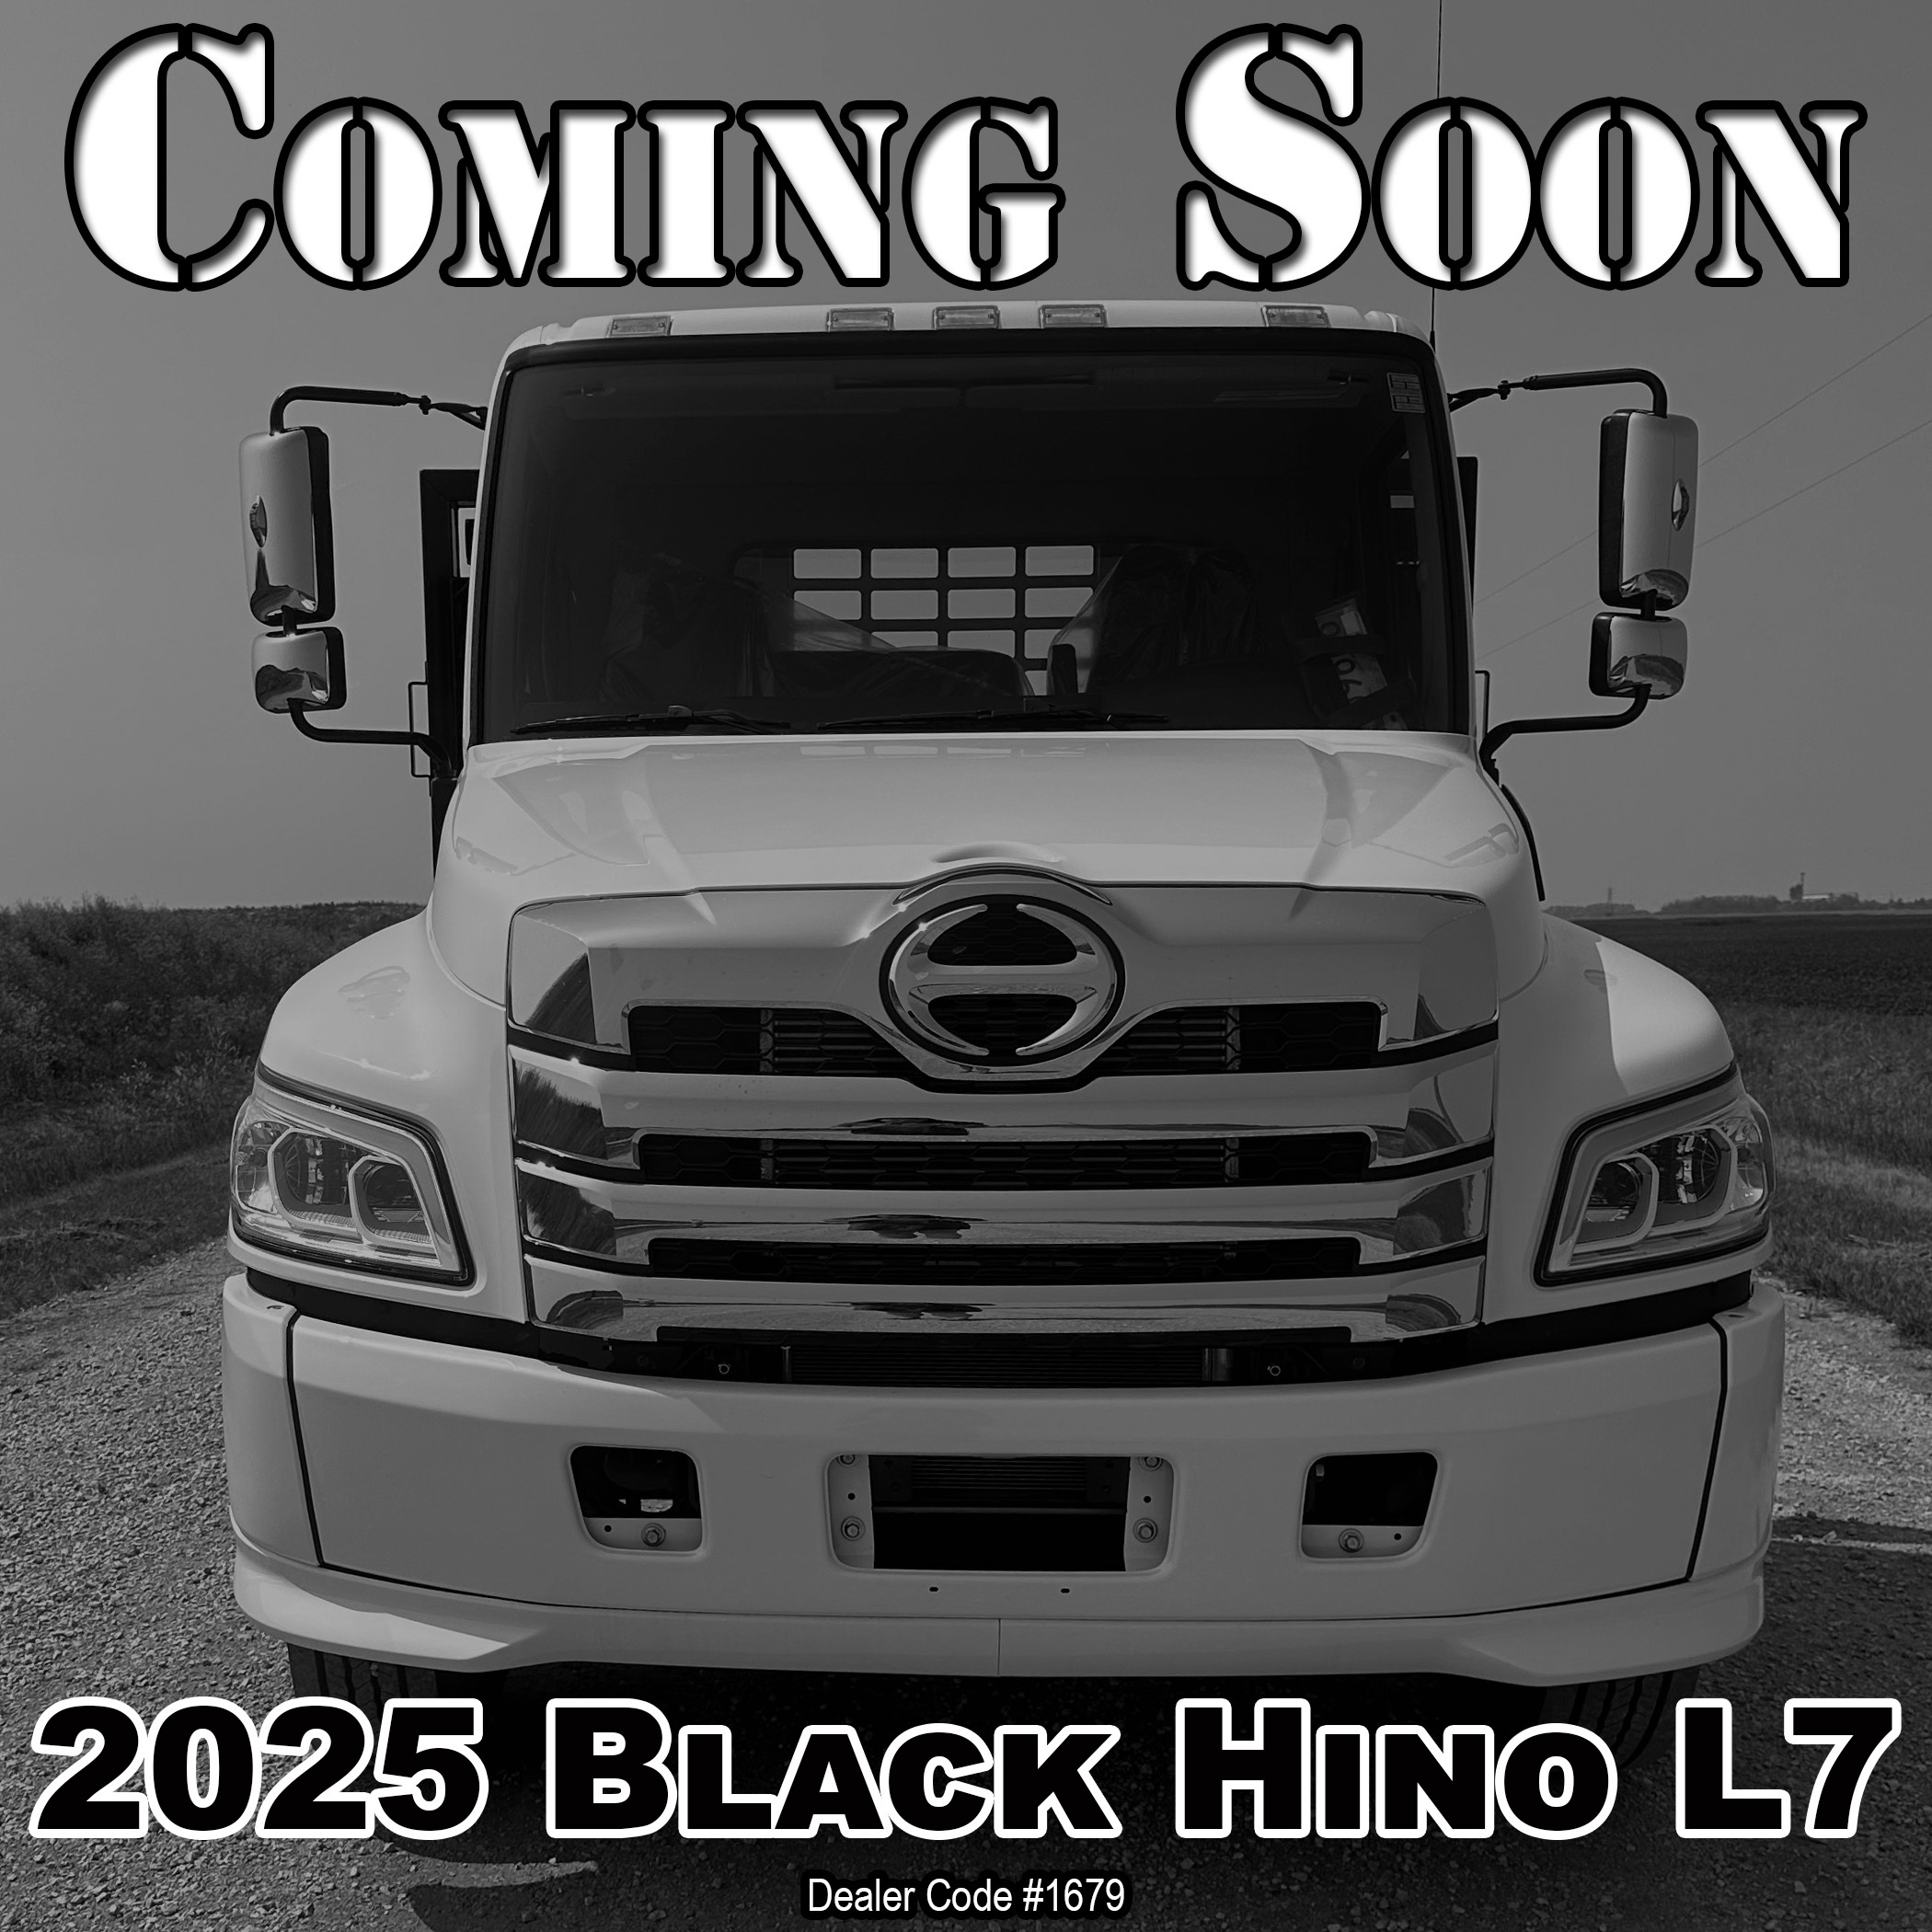 2025 Hino L7 Black Hino L7 Coming Soon!!